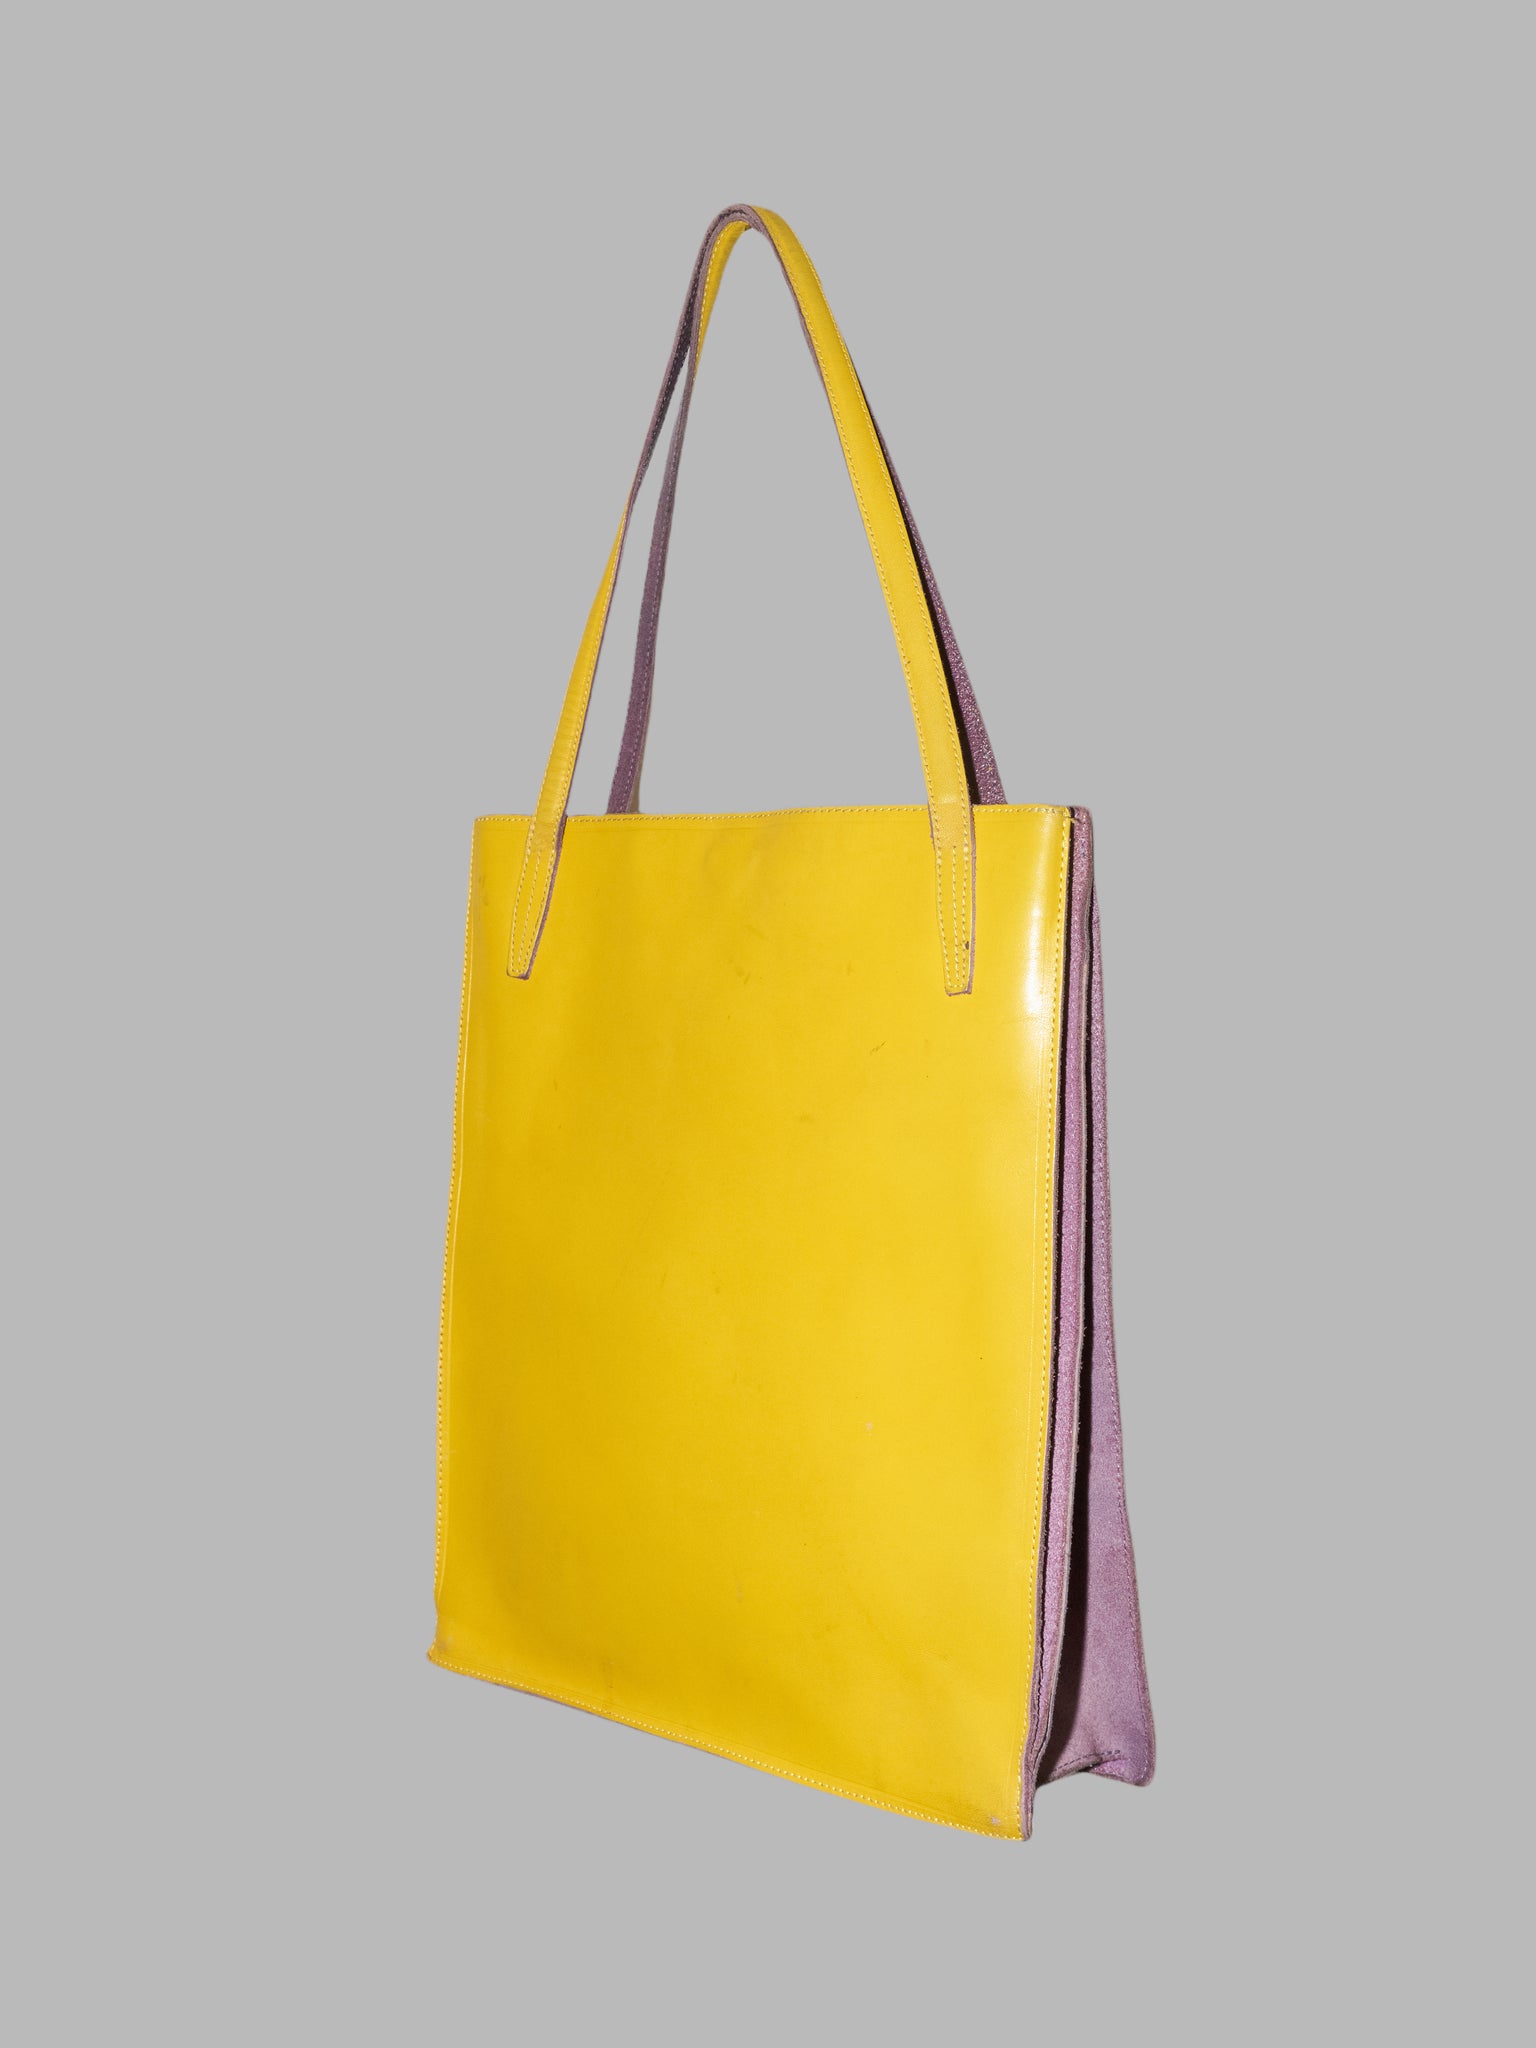 Masaki Matsushima Paris yellow and purple cowhide leather tote bag